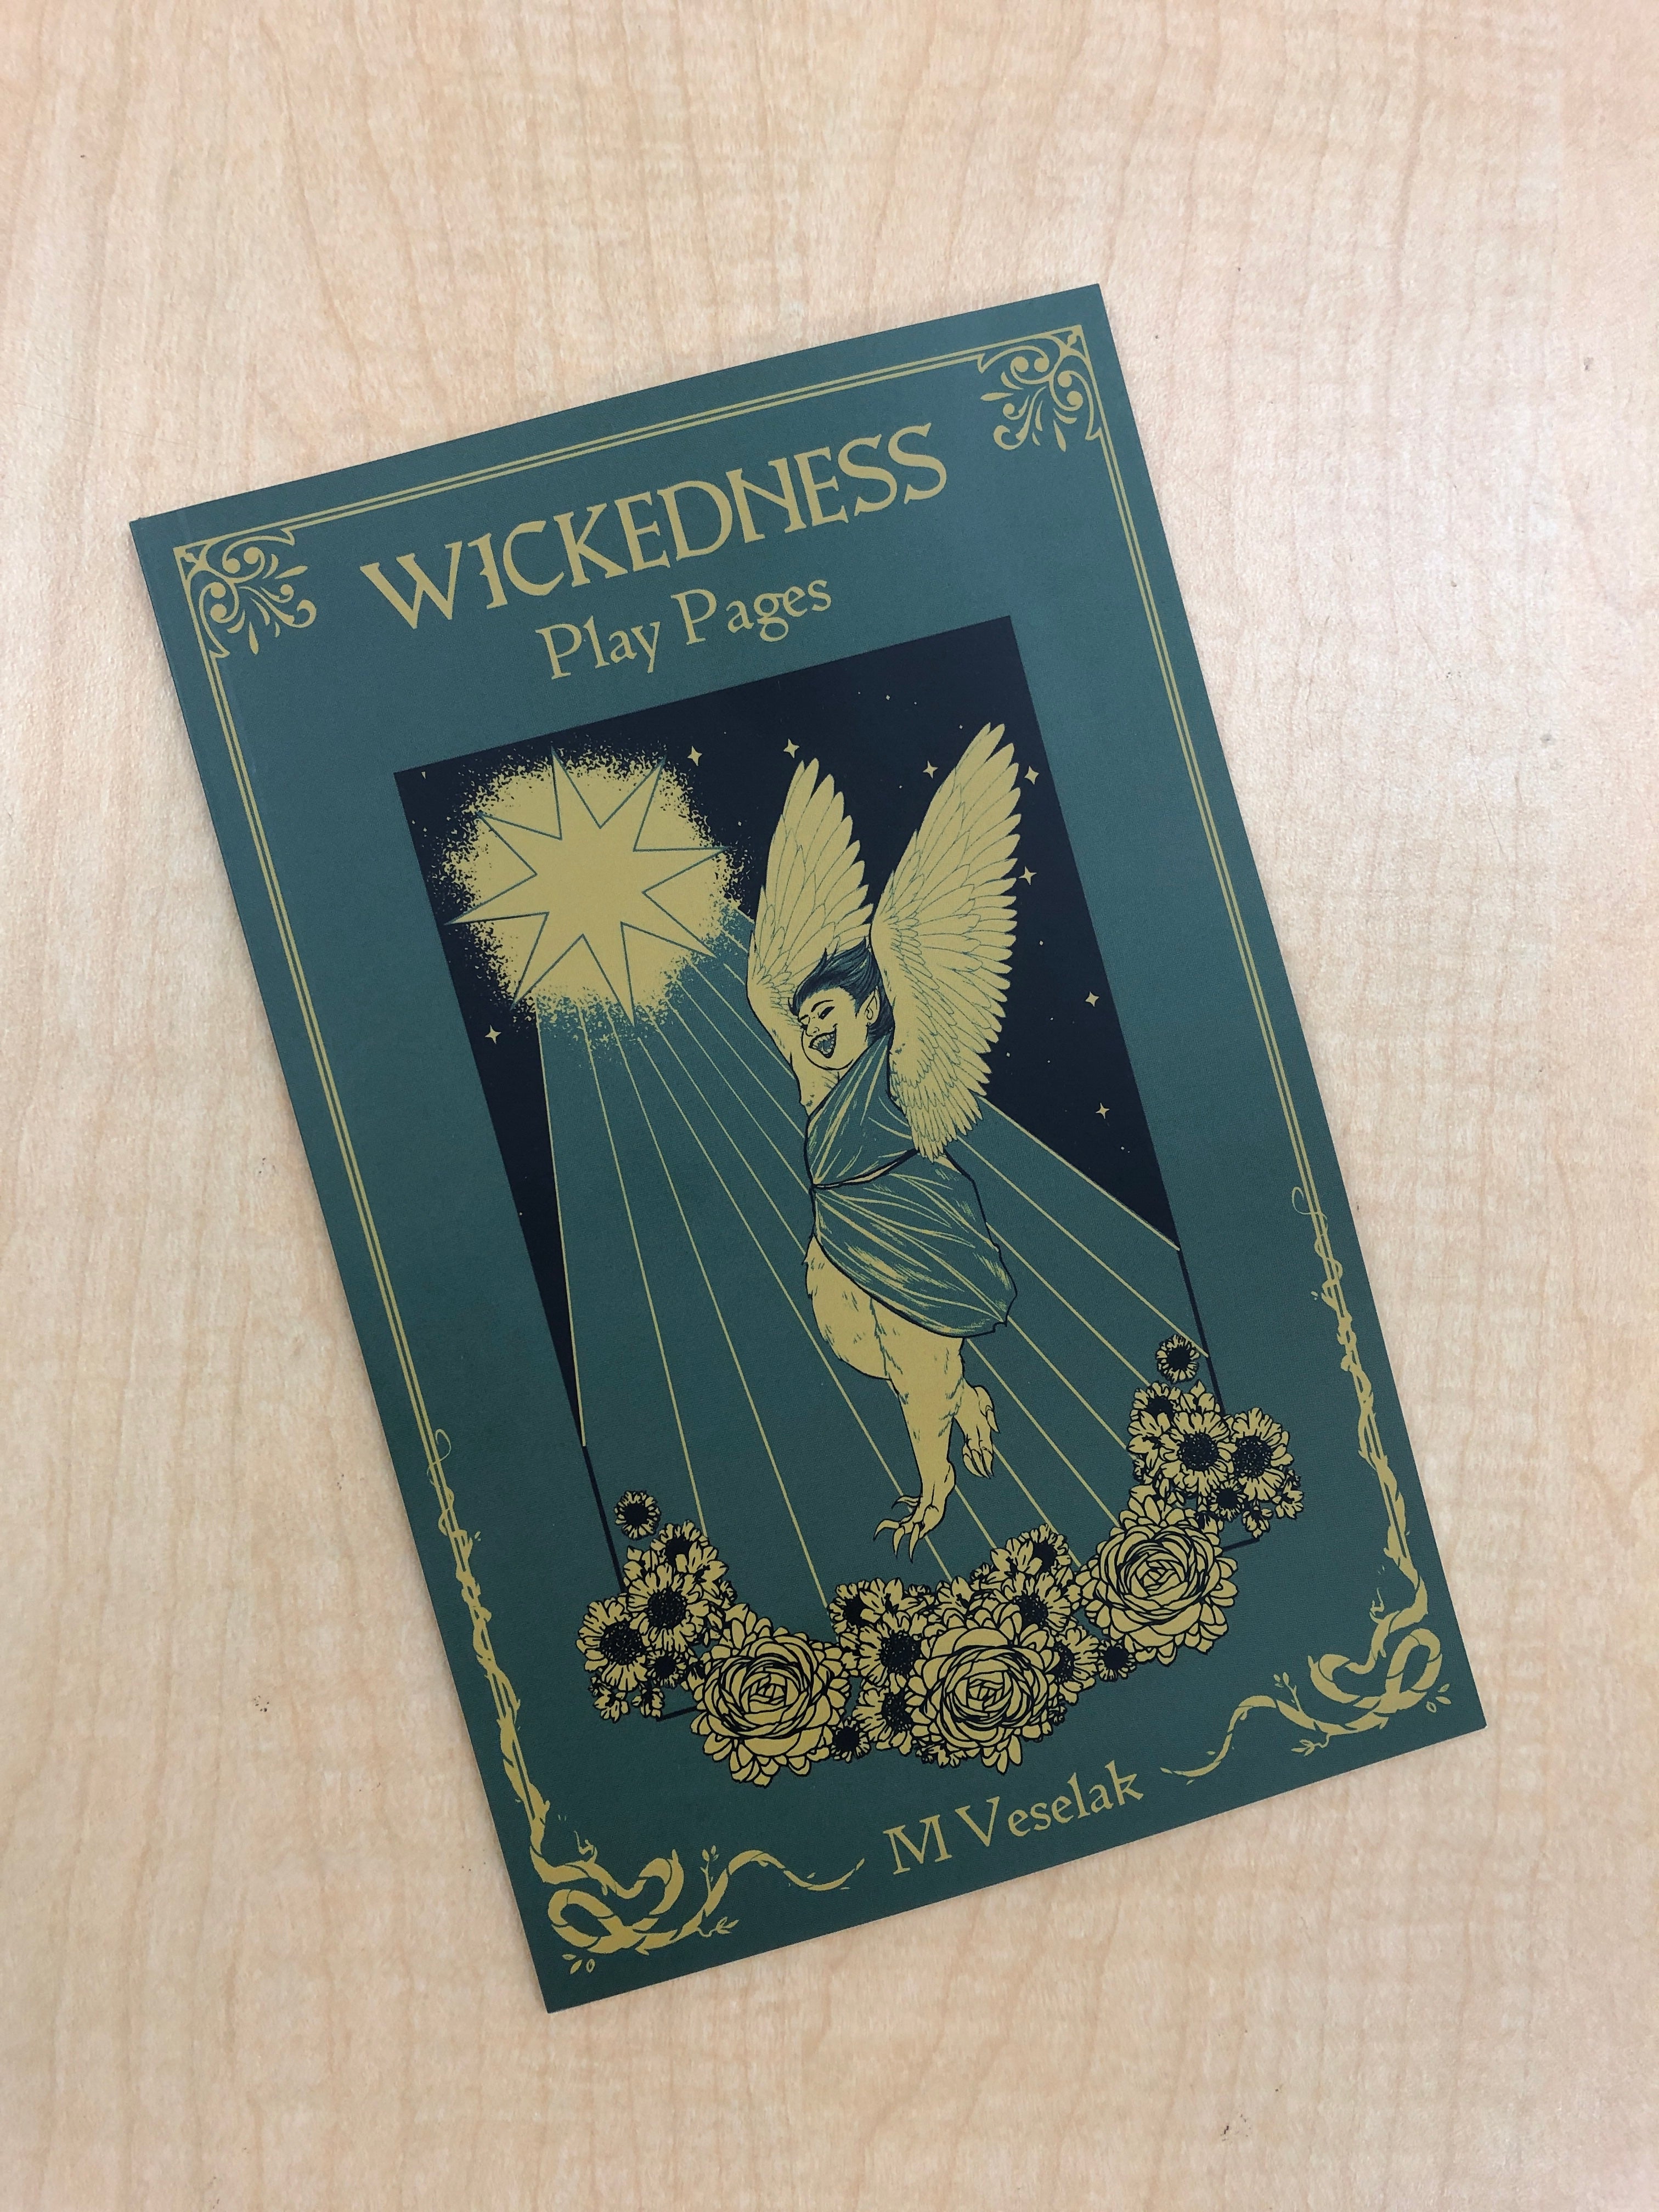 Wickedness by M Veselak